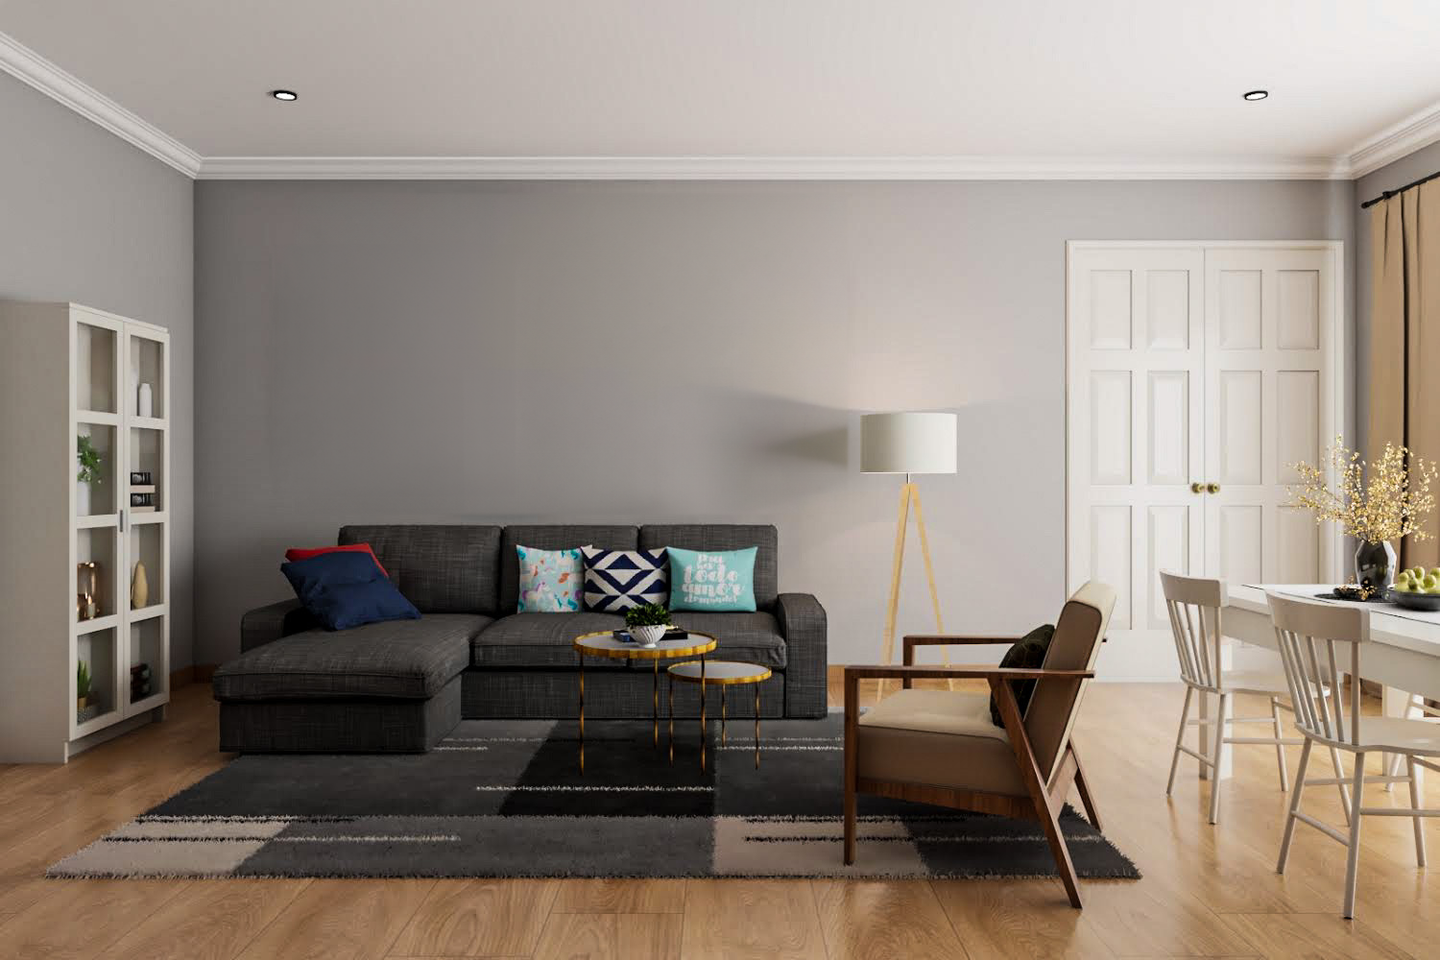 Living Room Design With Grey Upholstered Sofa - Livspace